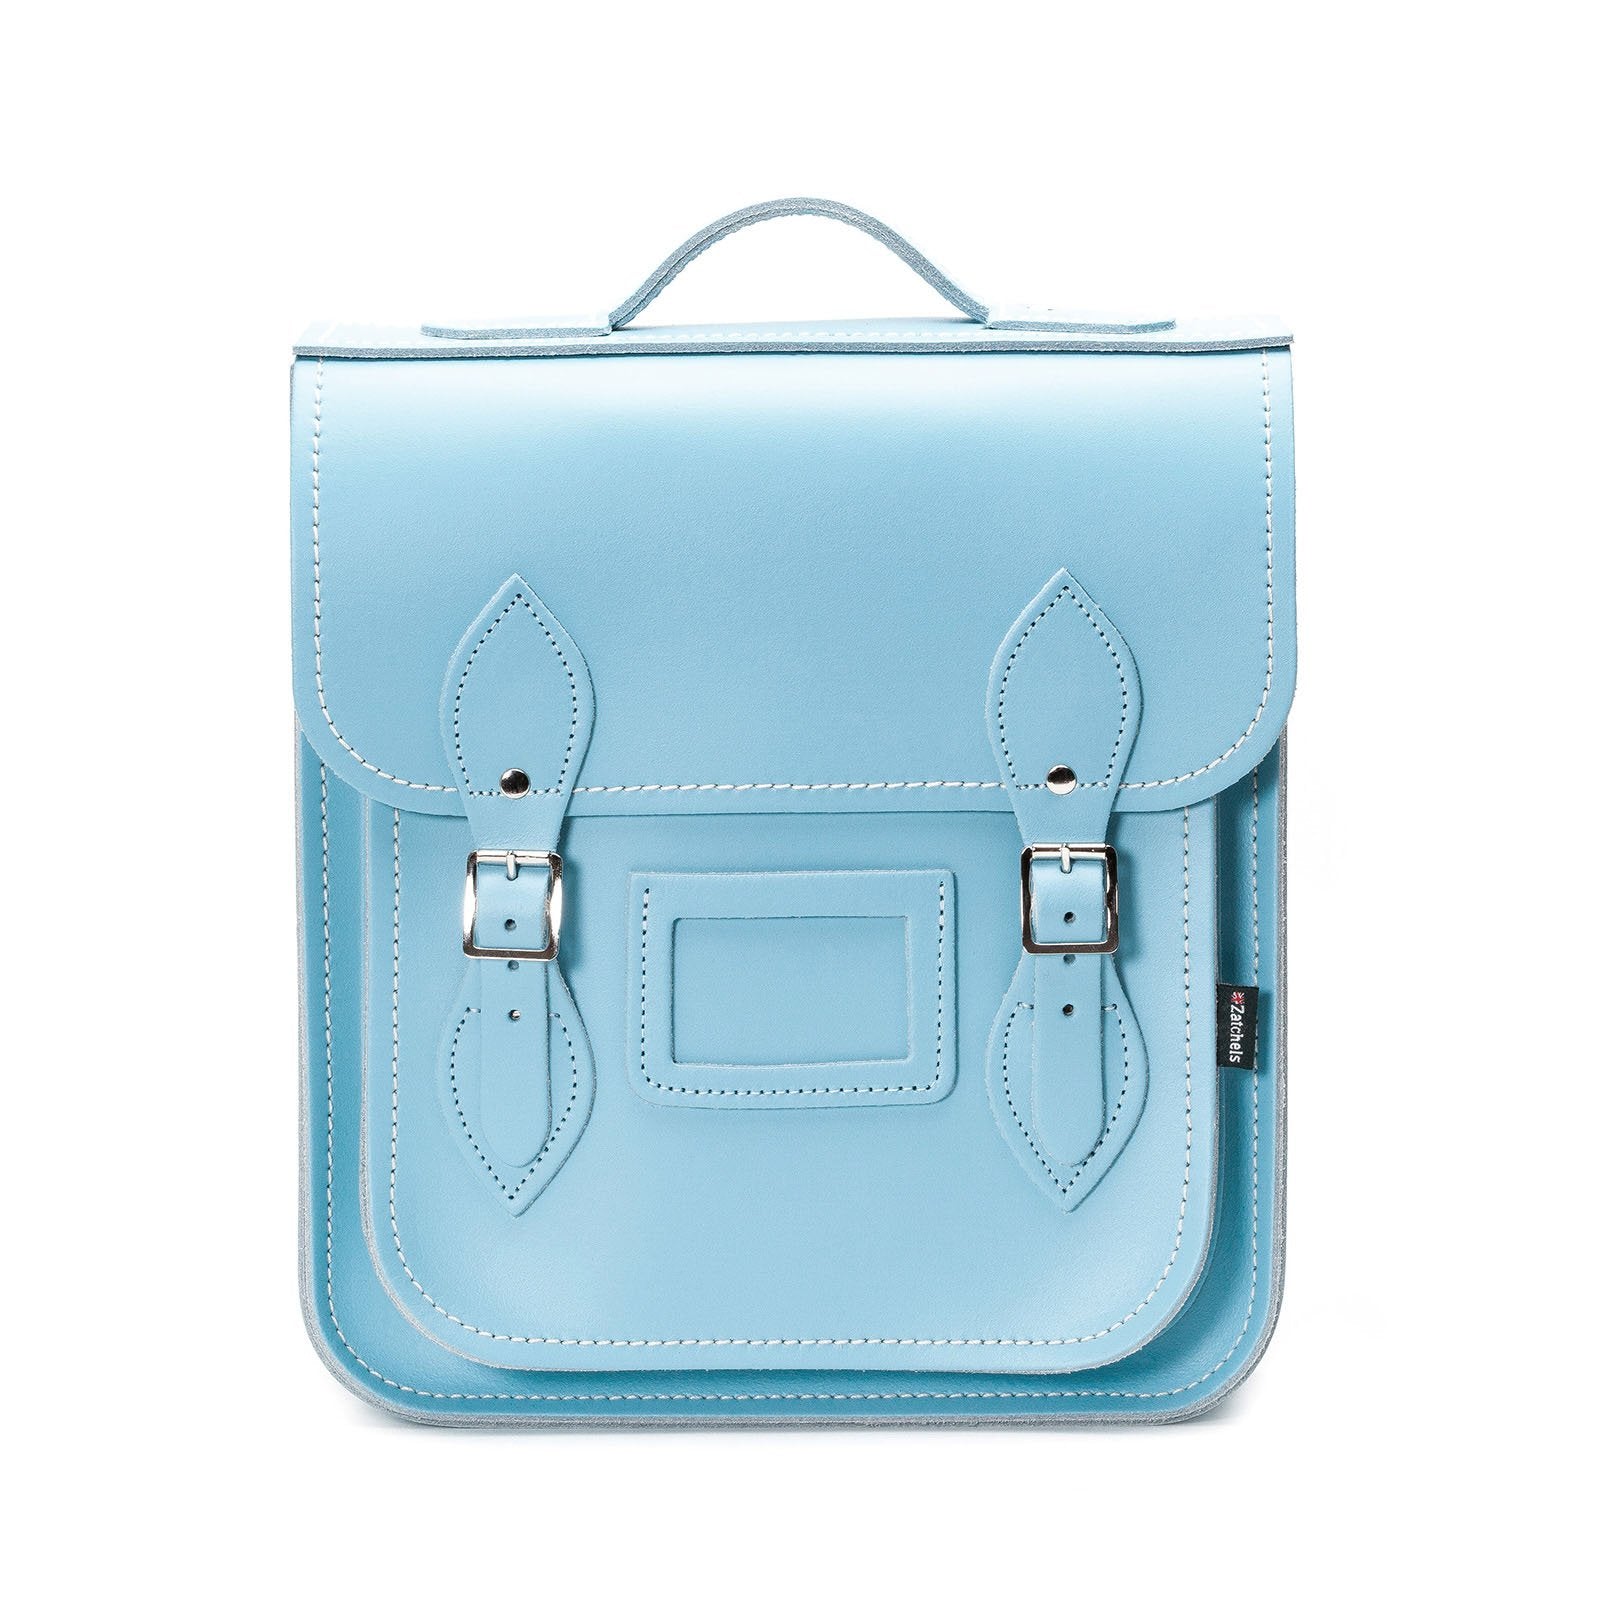 Zatchels Pastel Blue Leather City Backpack | Free UK P&P